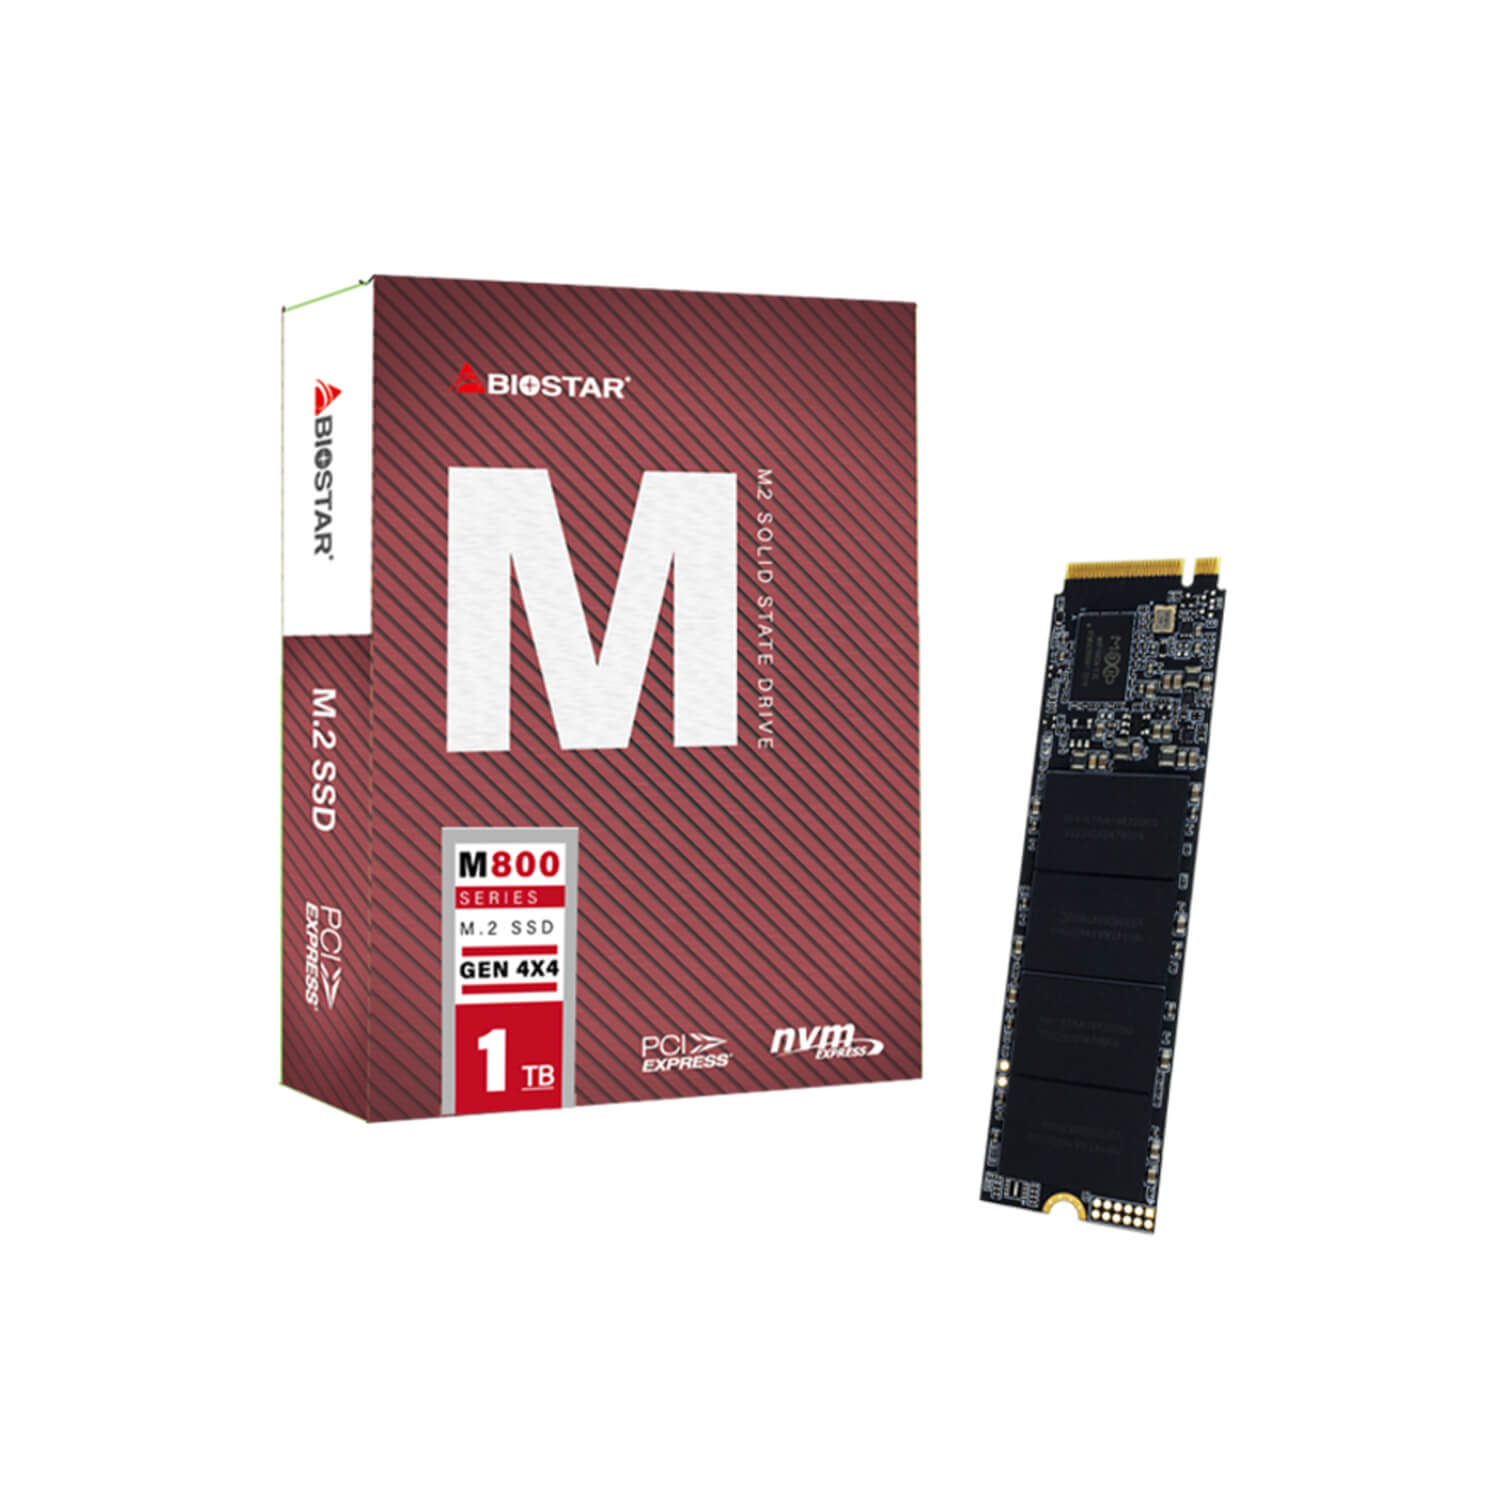 SSD (เอสเอสดี) M.2 BIOSTAR M800 1TB